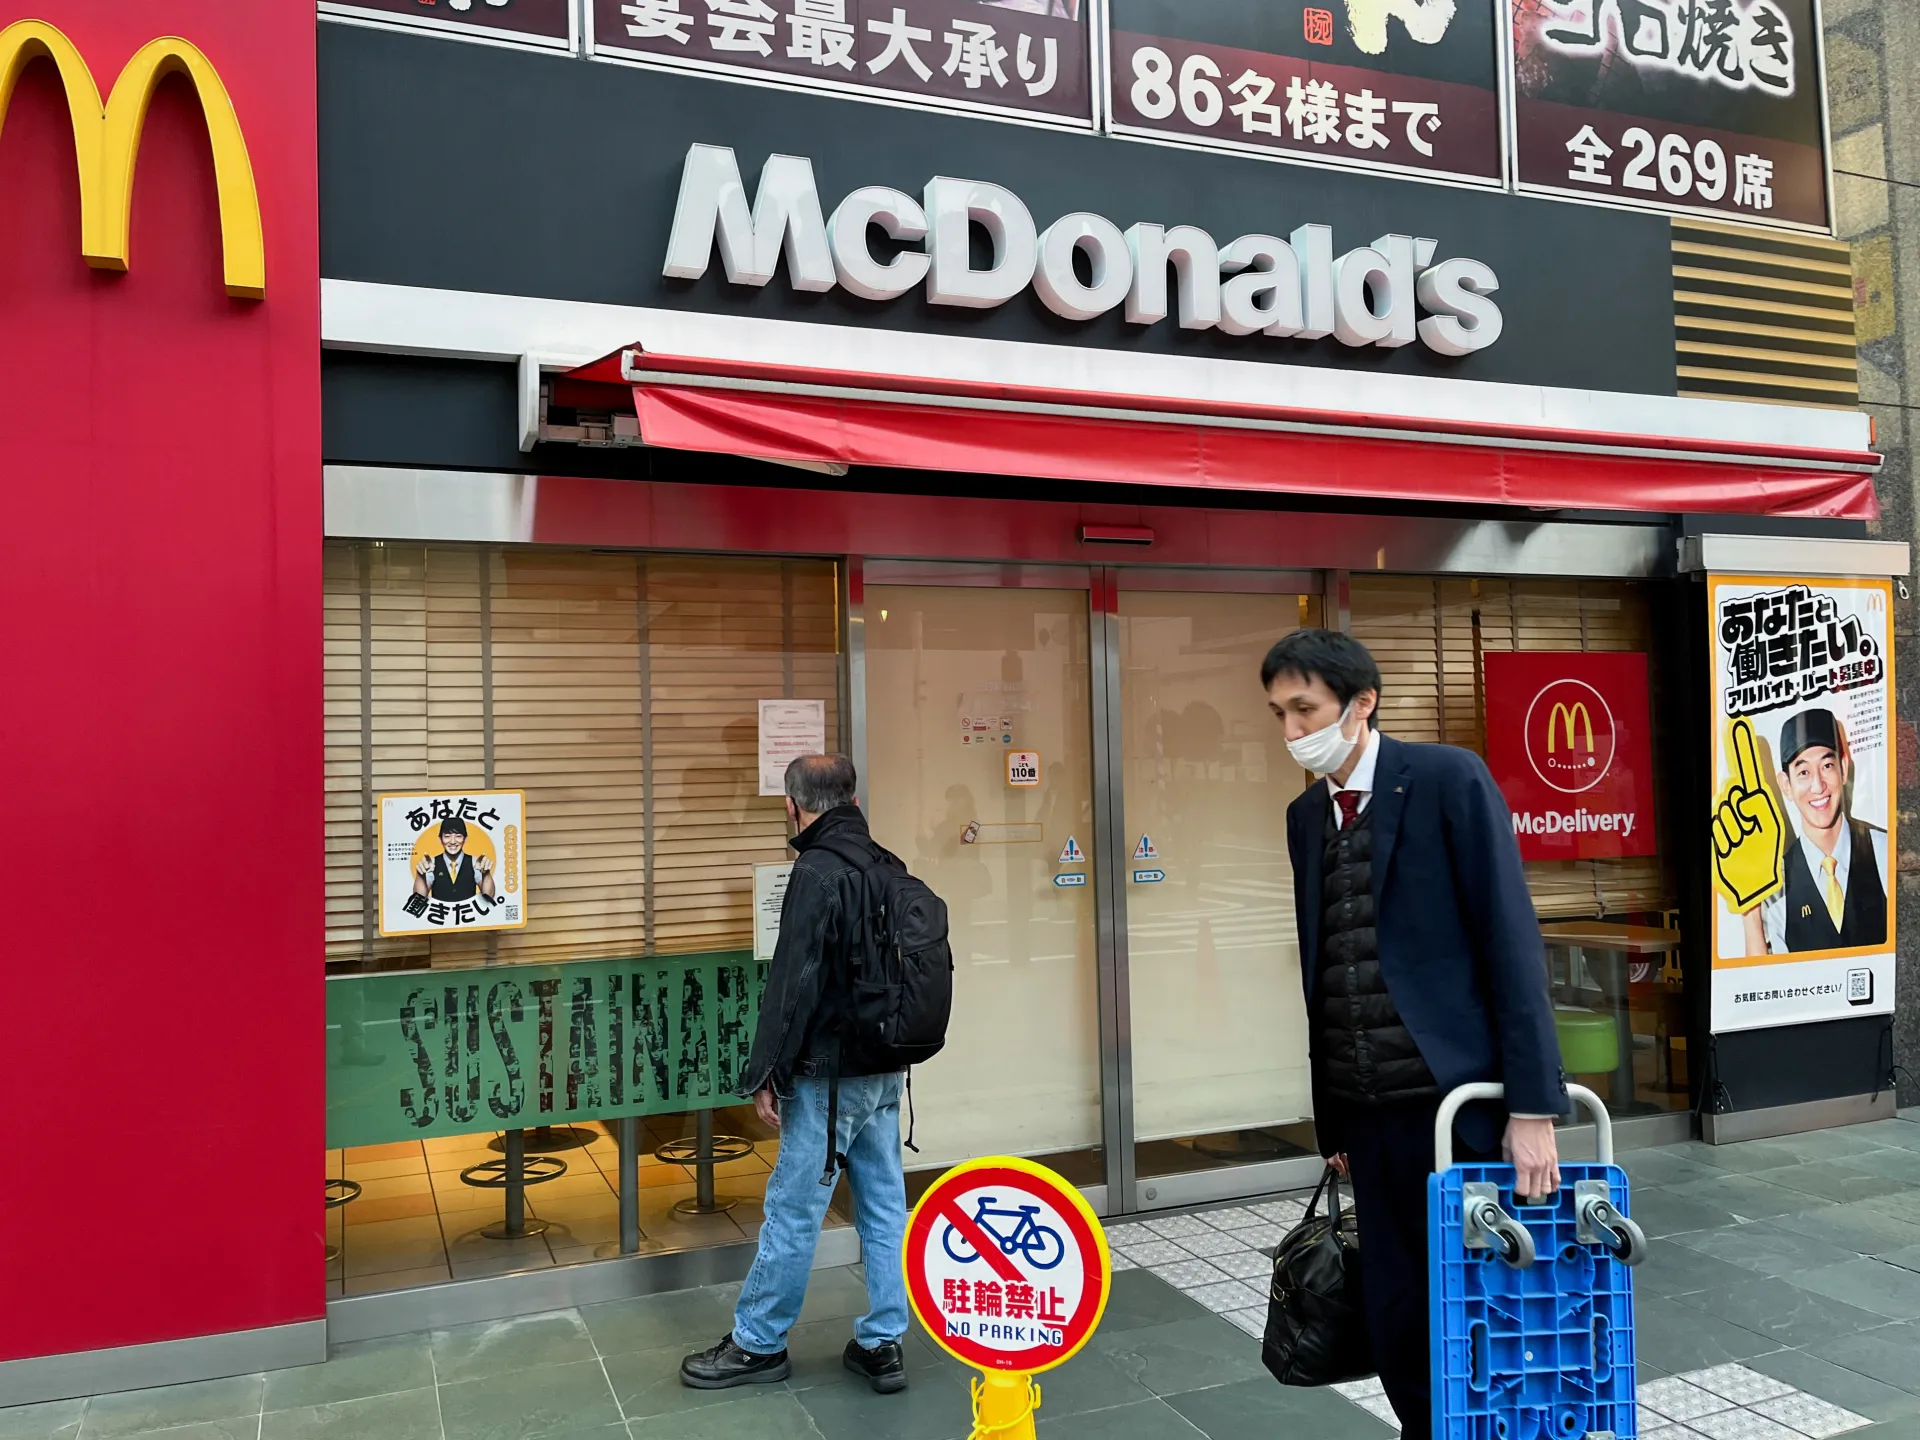 Global Fast Food Fiasco: How a Simple Tech Glitch Closed McDonald's Worldwide